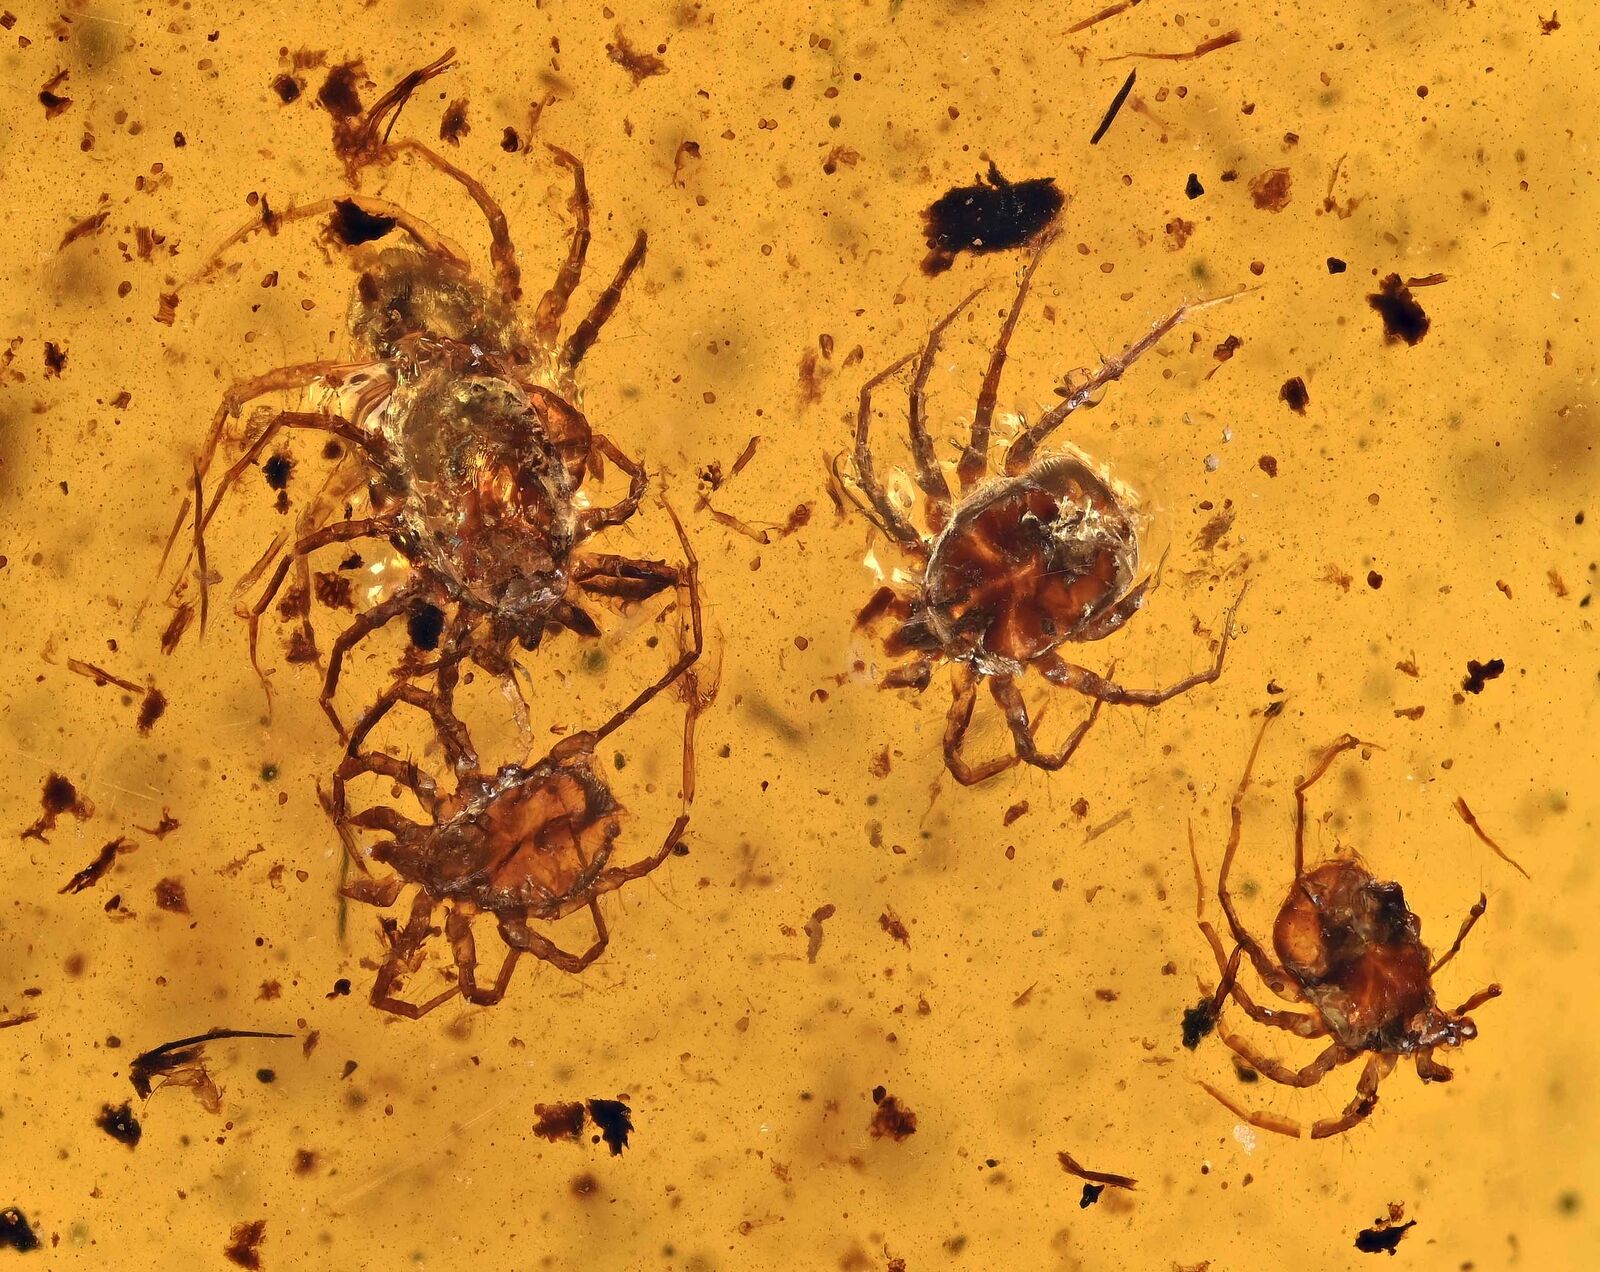 Swarm of Acari (Ticks), Fossil inclusion in Burmese Amber